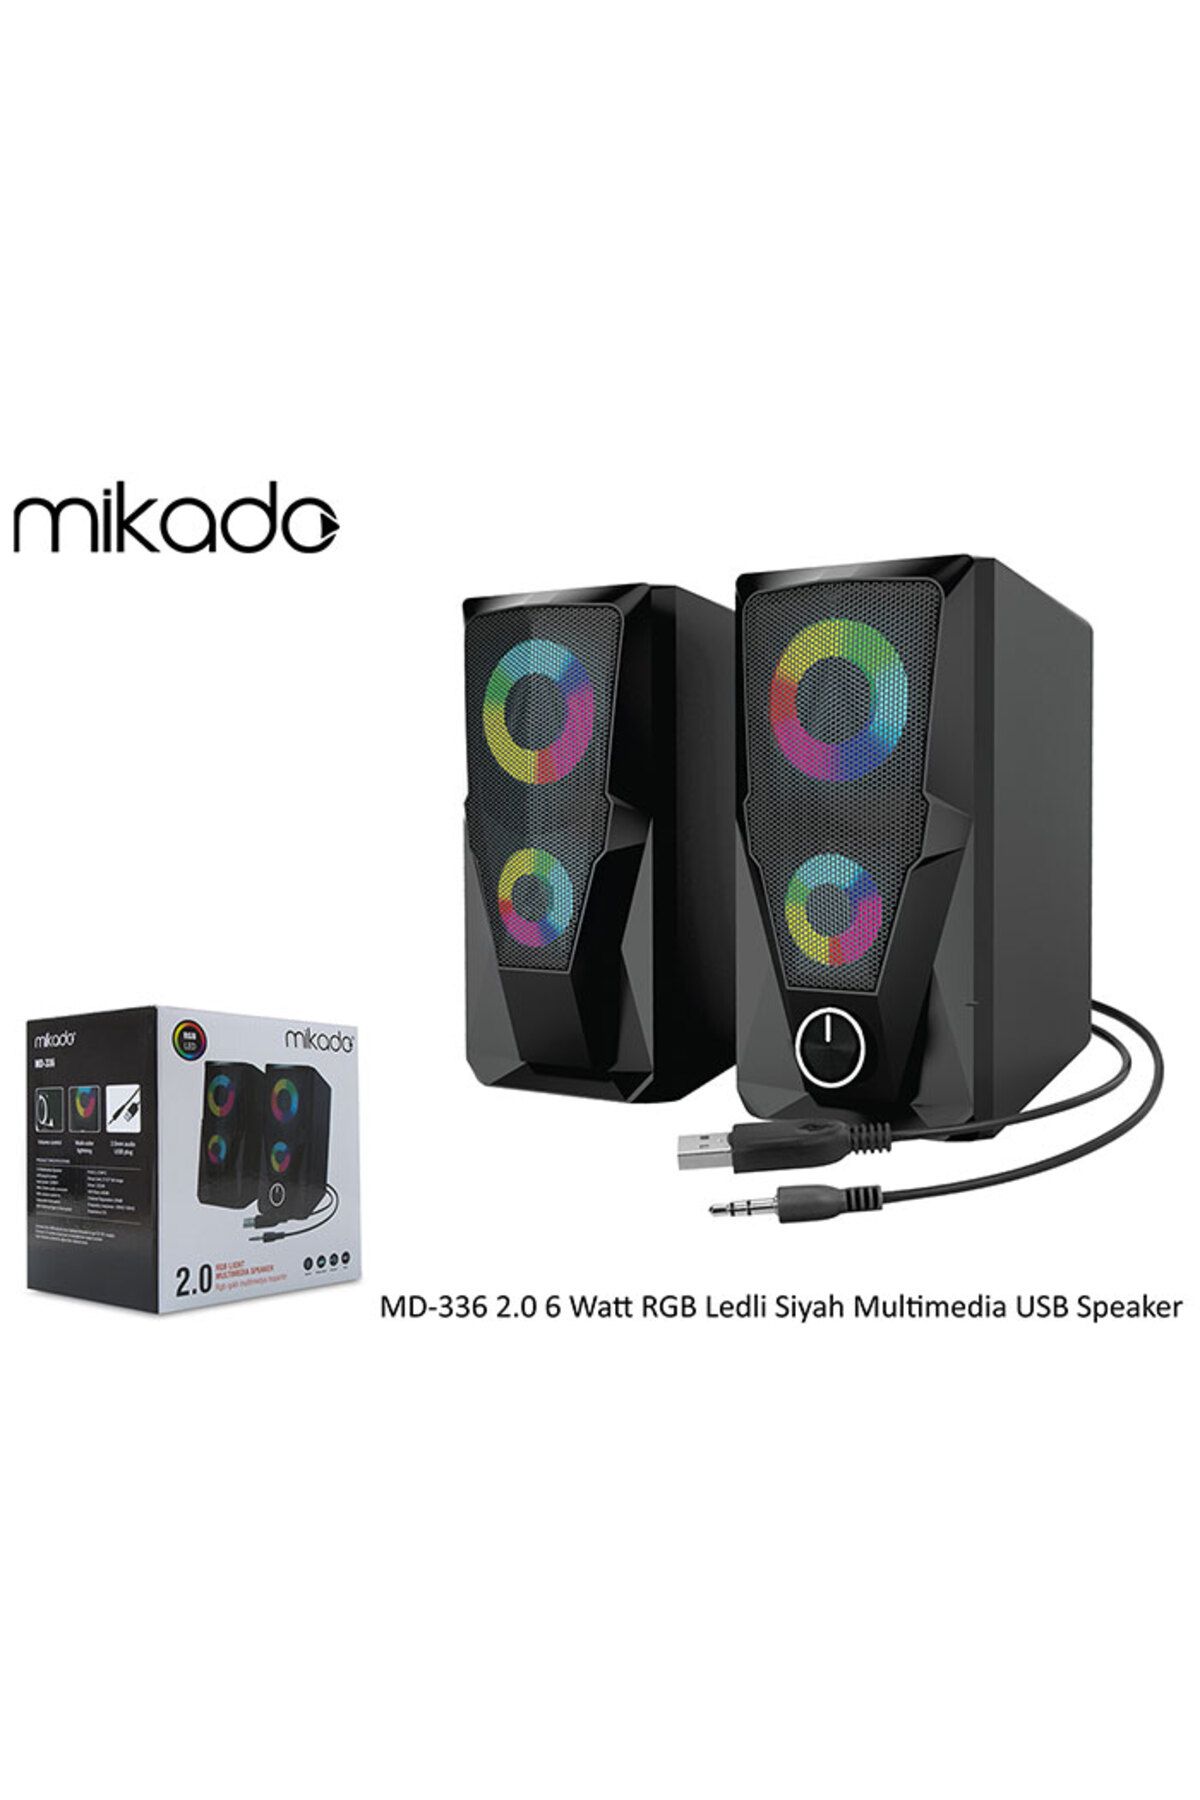 Mikado Md-336 2.0 6 Watt Rgb Ledli Siyah Multimedia Usb Speaker